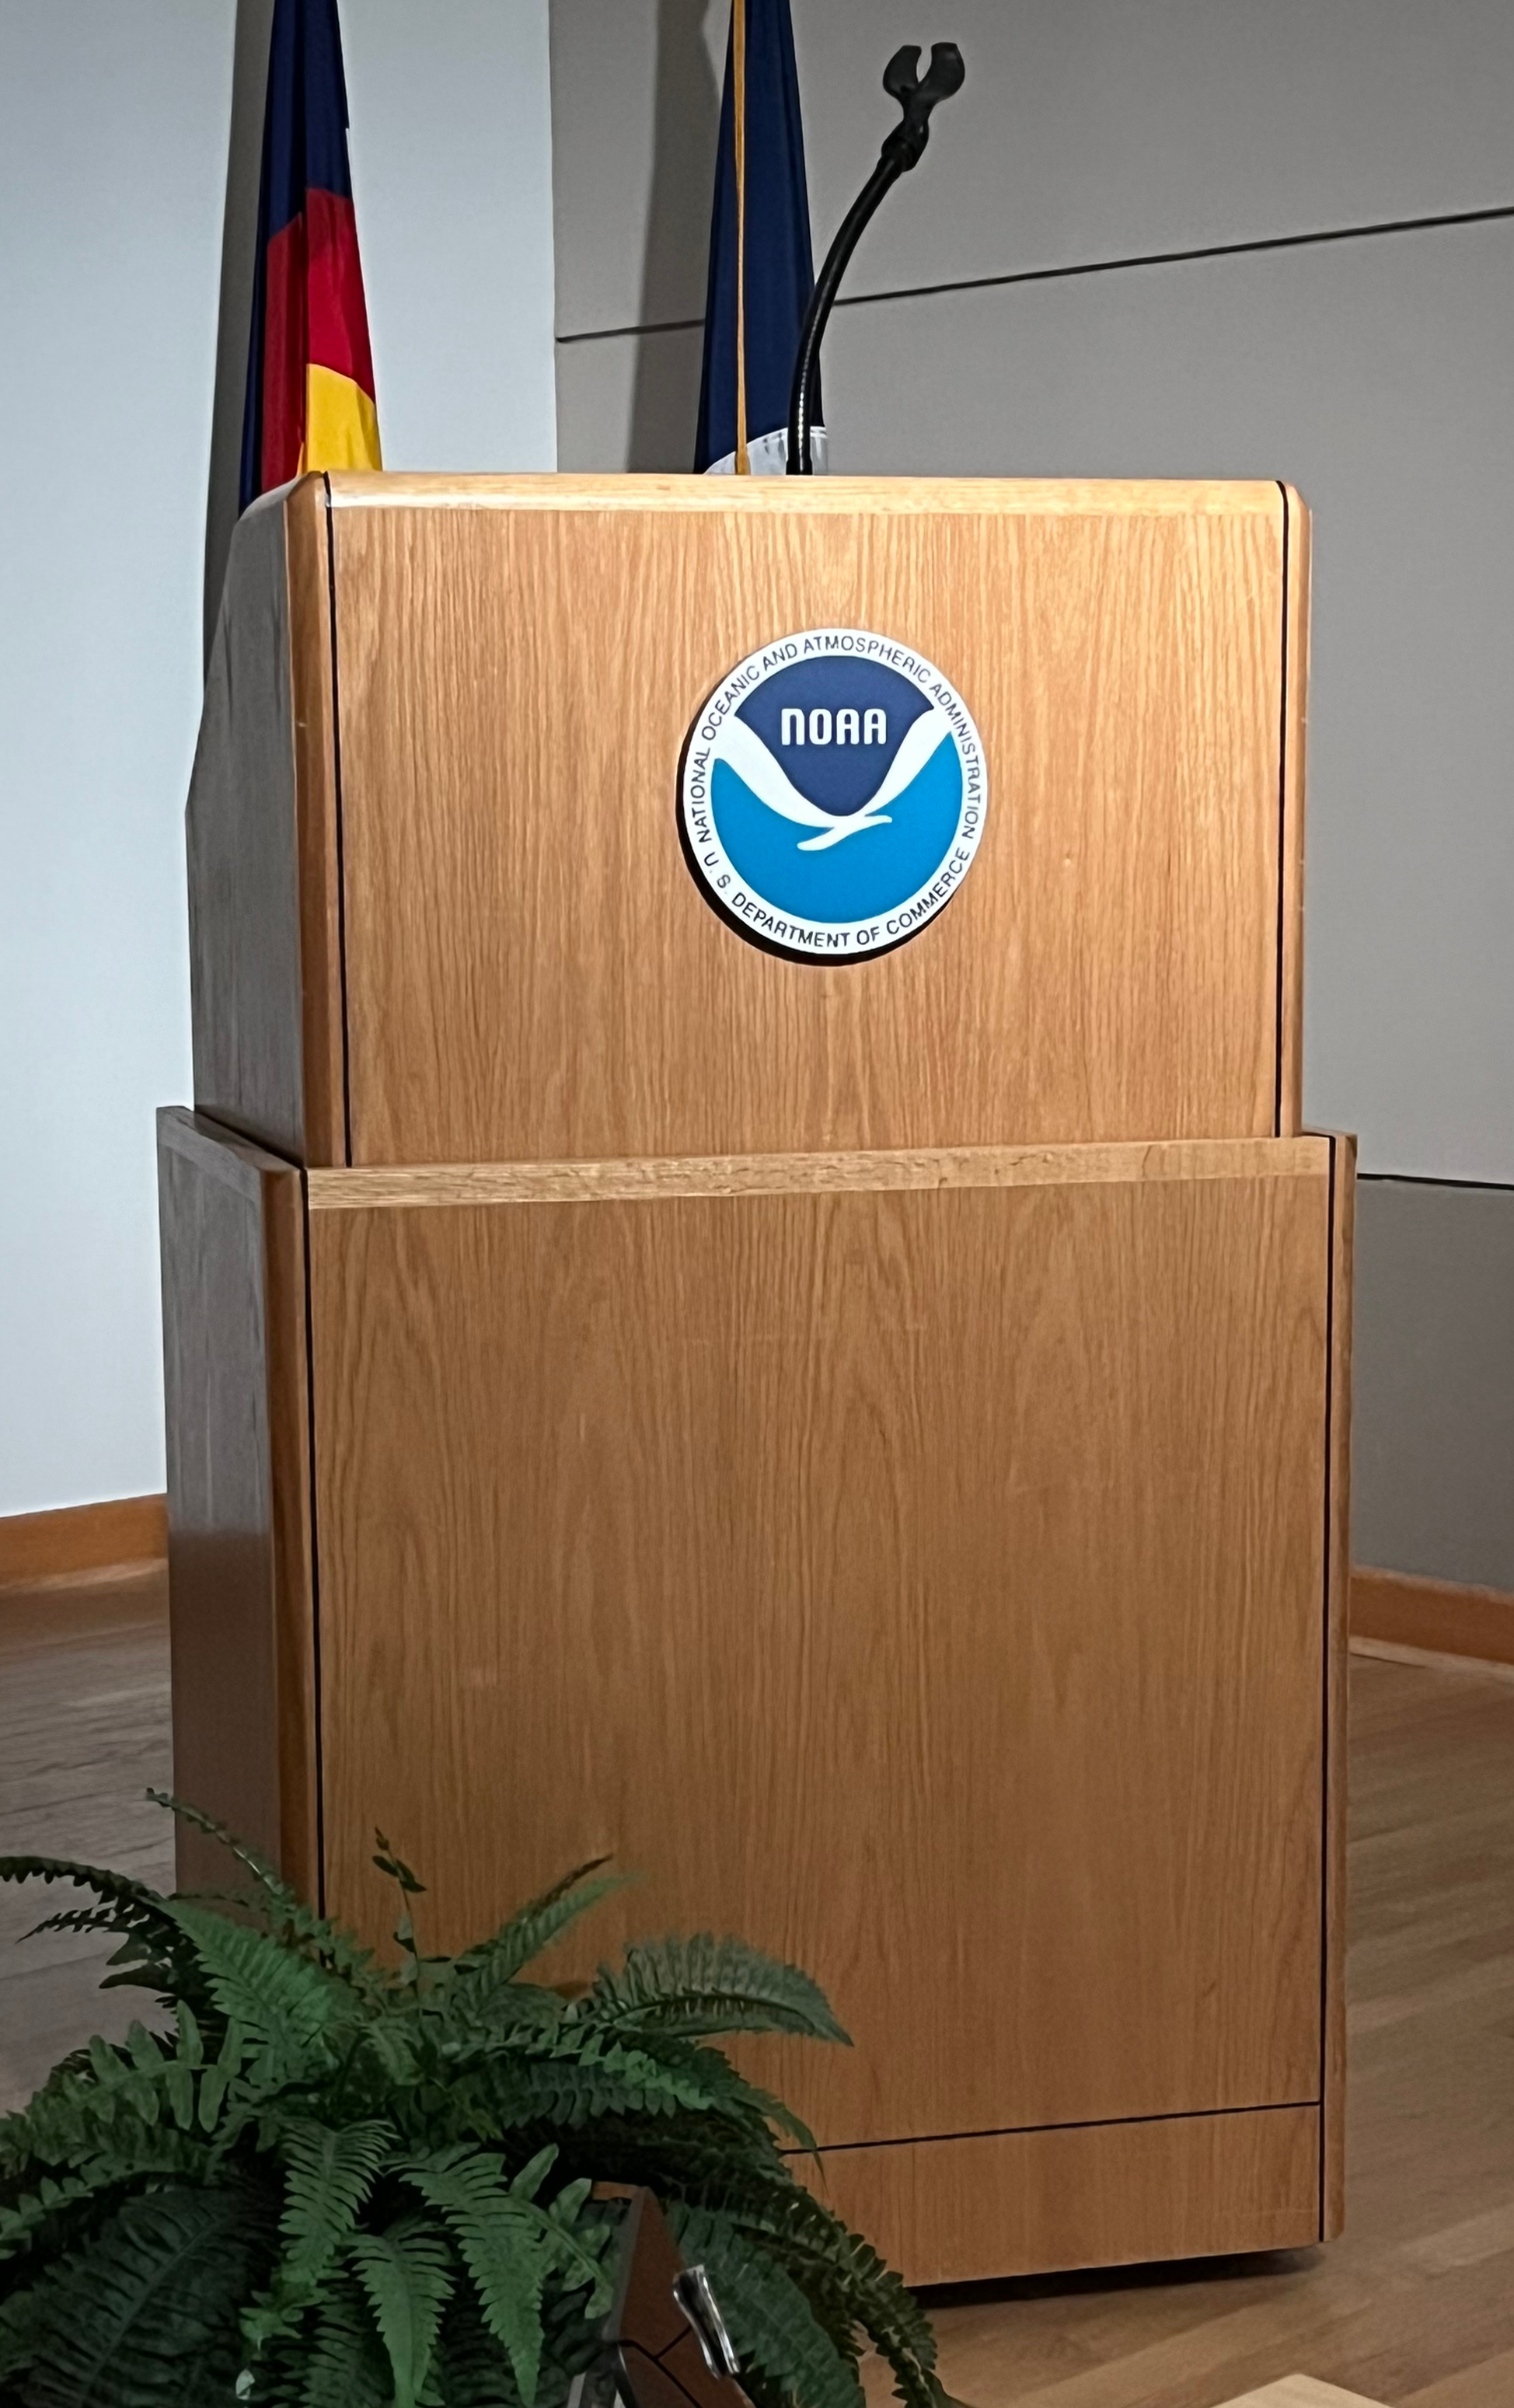 Podium with the NOAA logo on it